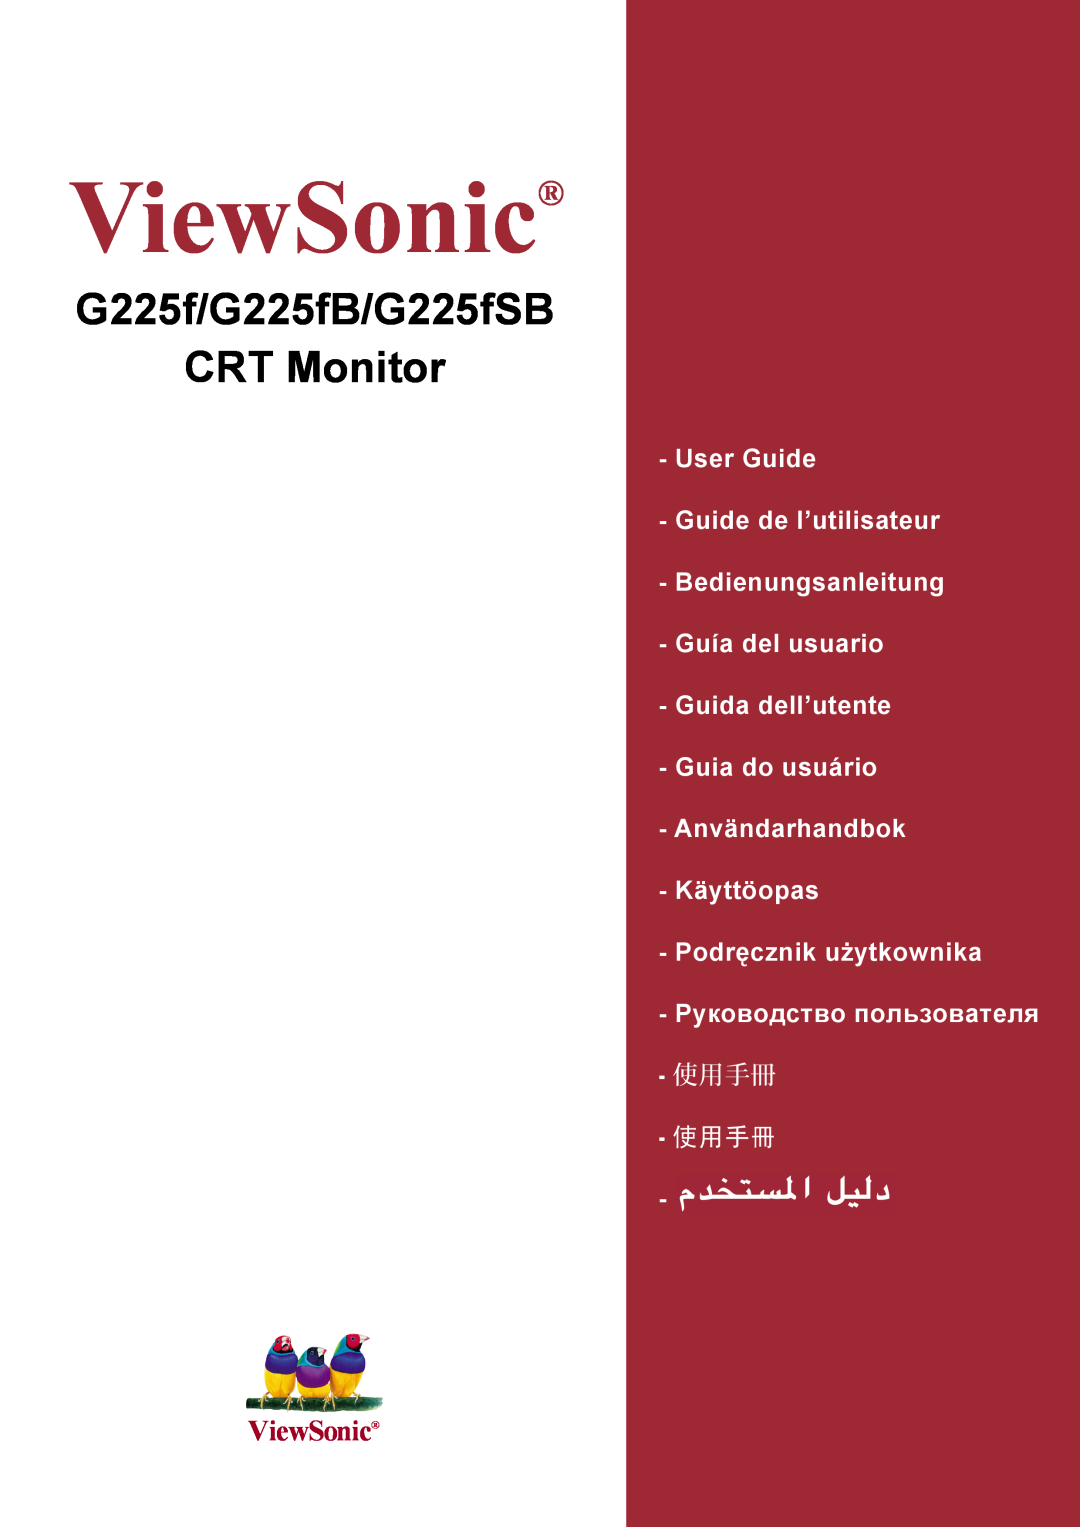 ViewSonic G225FB manual ViewSonic, G225f/G225fB/G225fSB CRT Monitor, User Guide, 使用手冊 